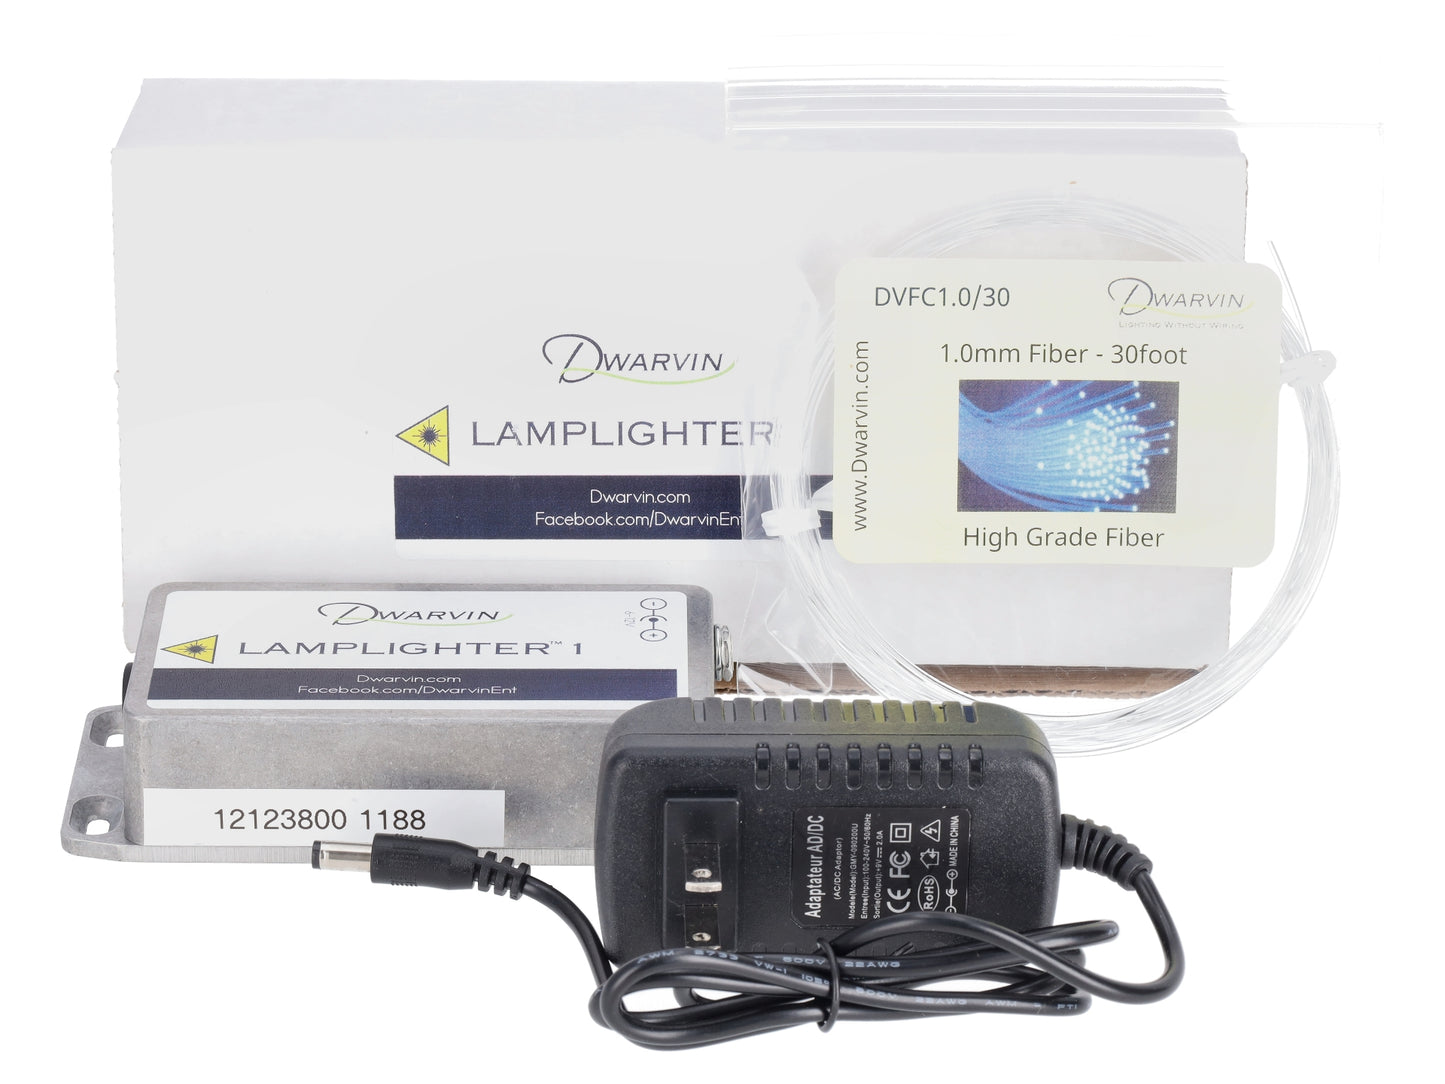 Dwarvin DVSK101 Lamplighter 1 Starter Kit with 1.0mm Fiber